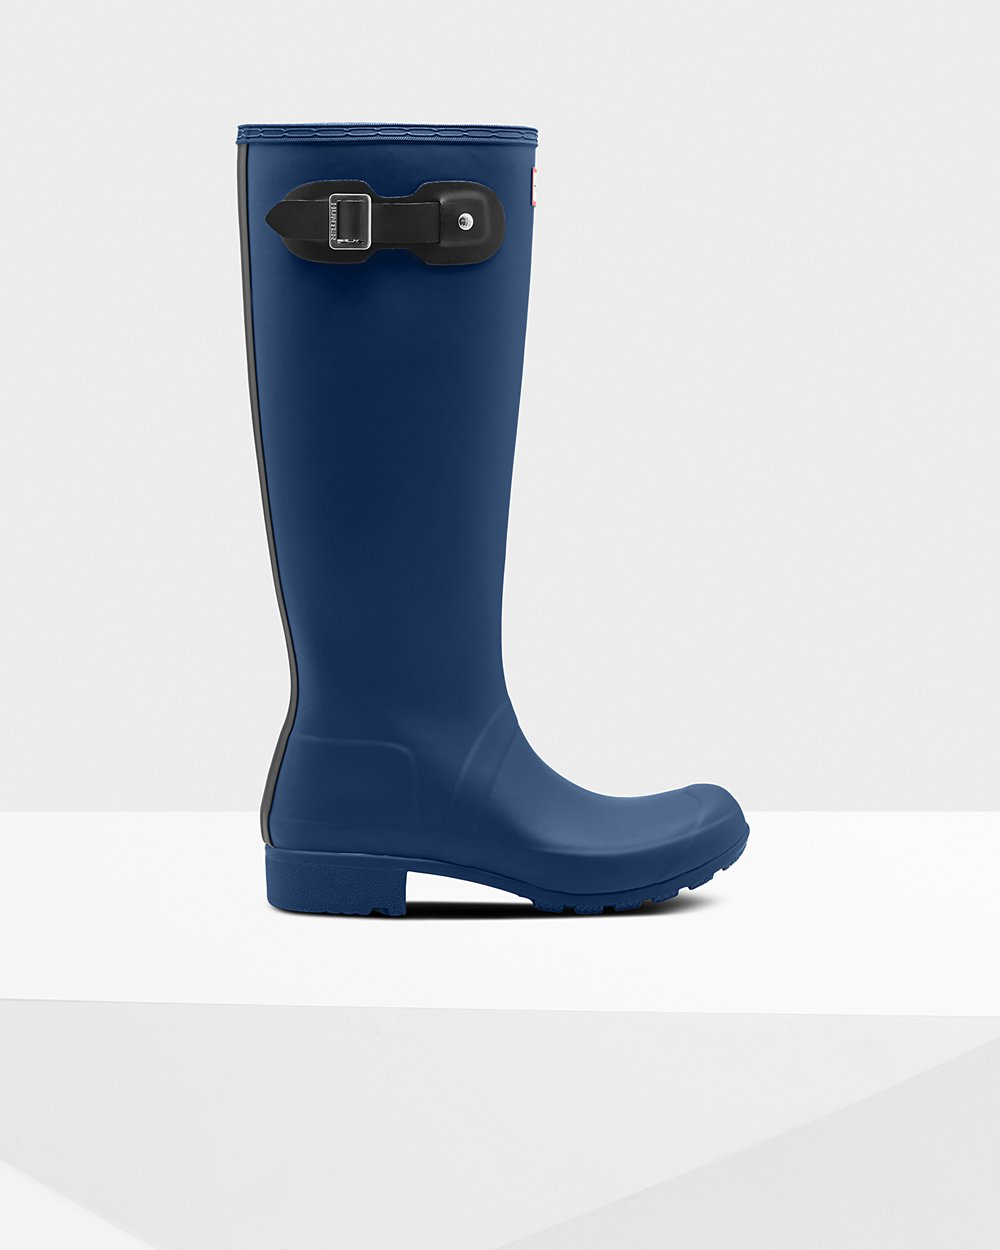 Womens Tall Rain Boots - Hunter Original Tour Foldable (26BADTLSF) - Navy